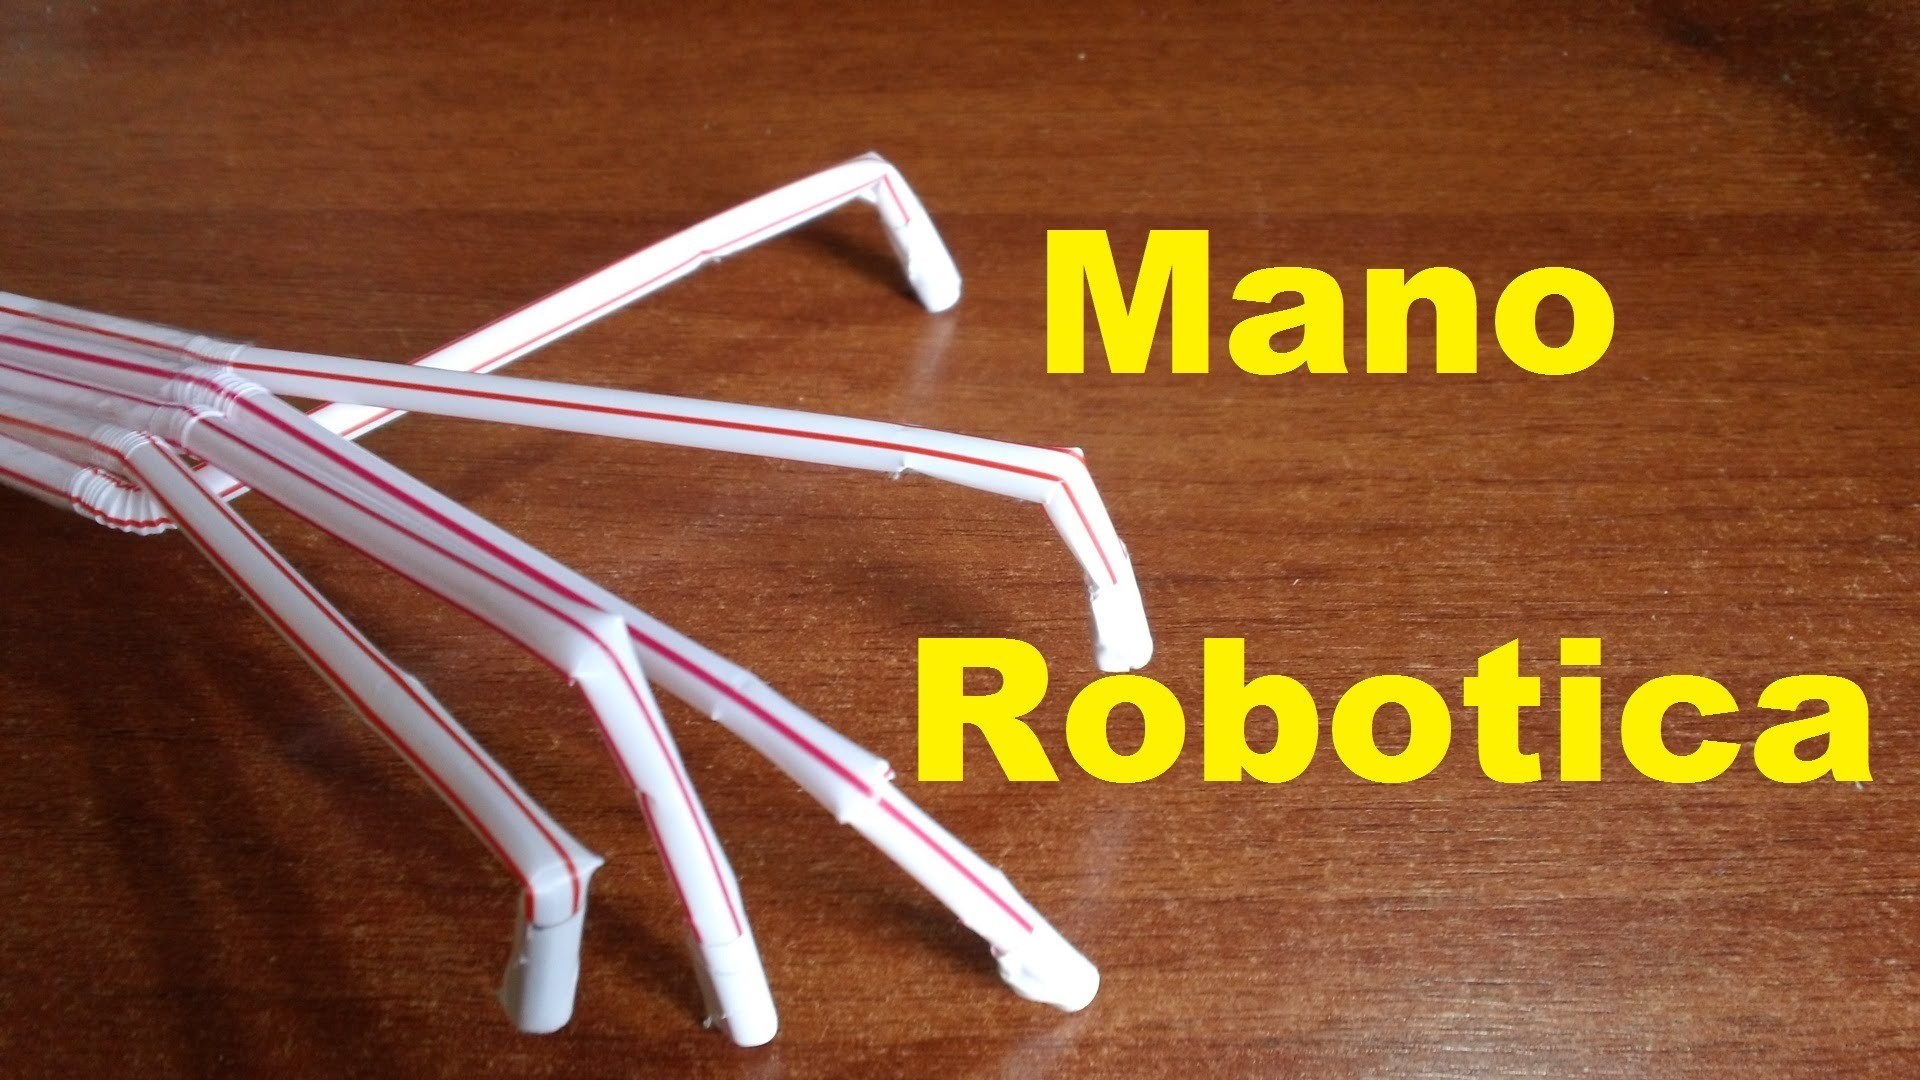 Mano Robotica Casera (Fácil de hacer) Robot hand